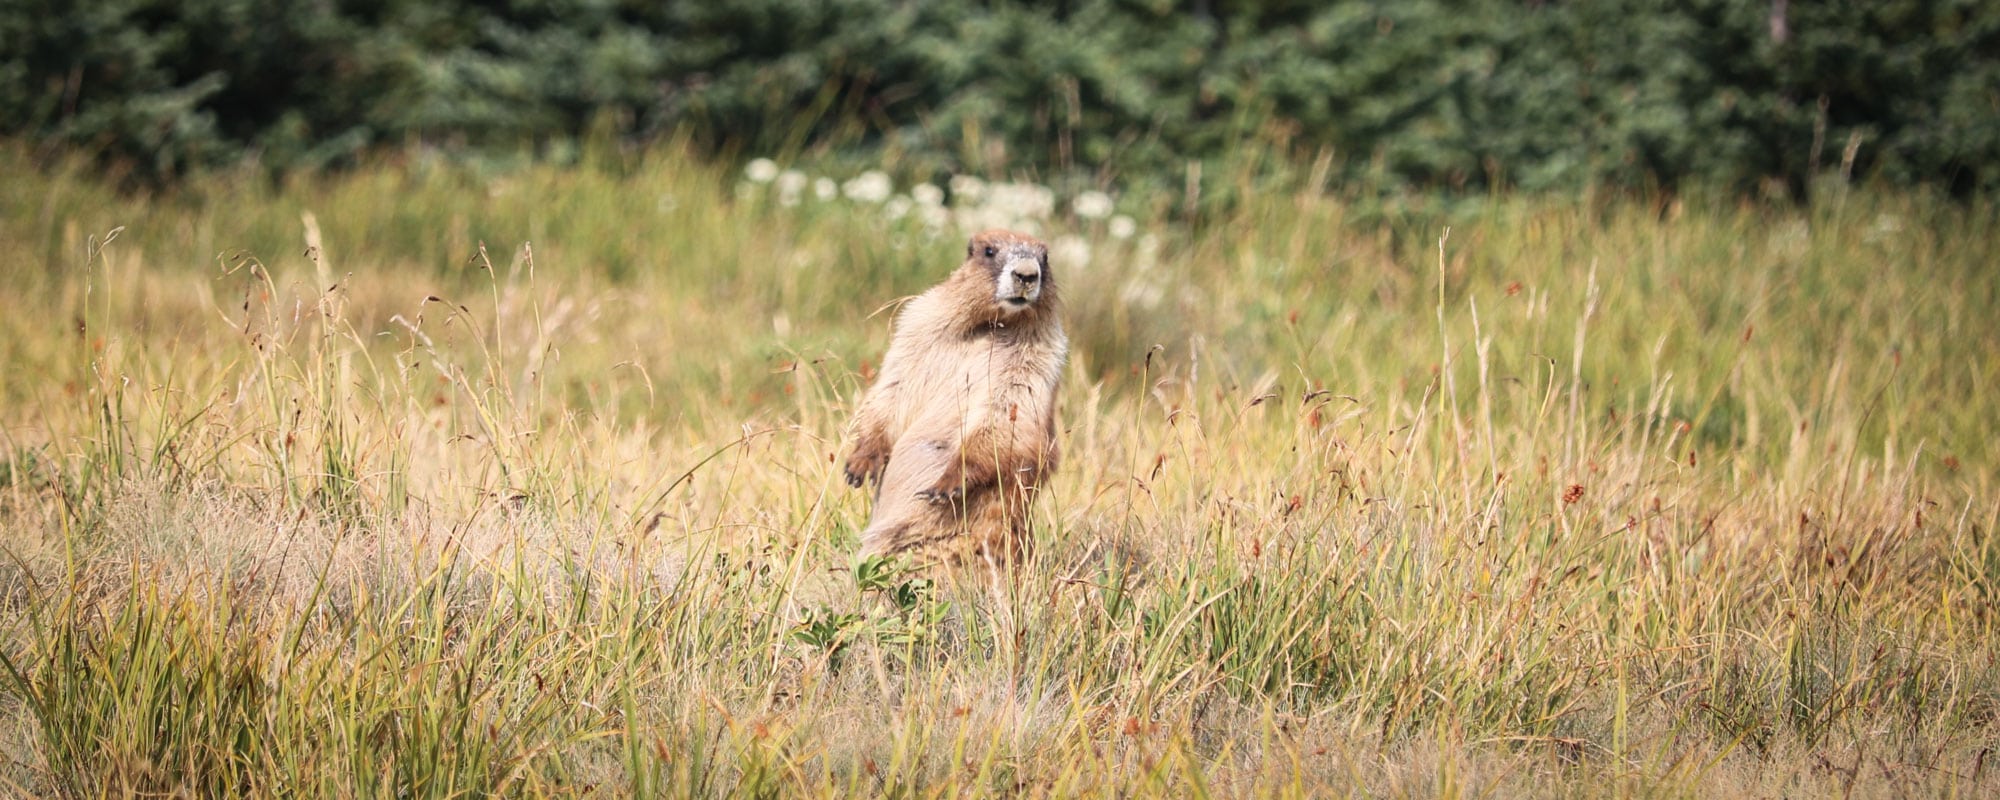 Olympic National Park, Washington - Banner Marmot